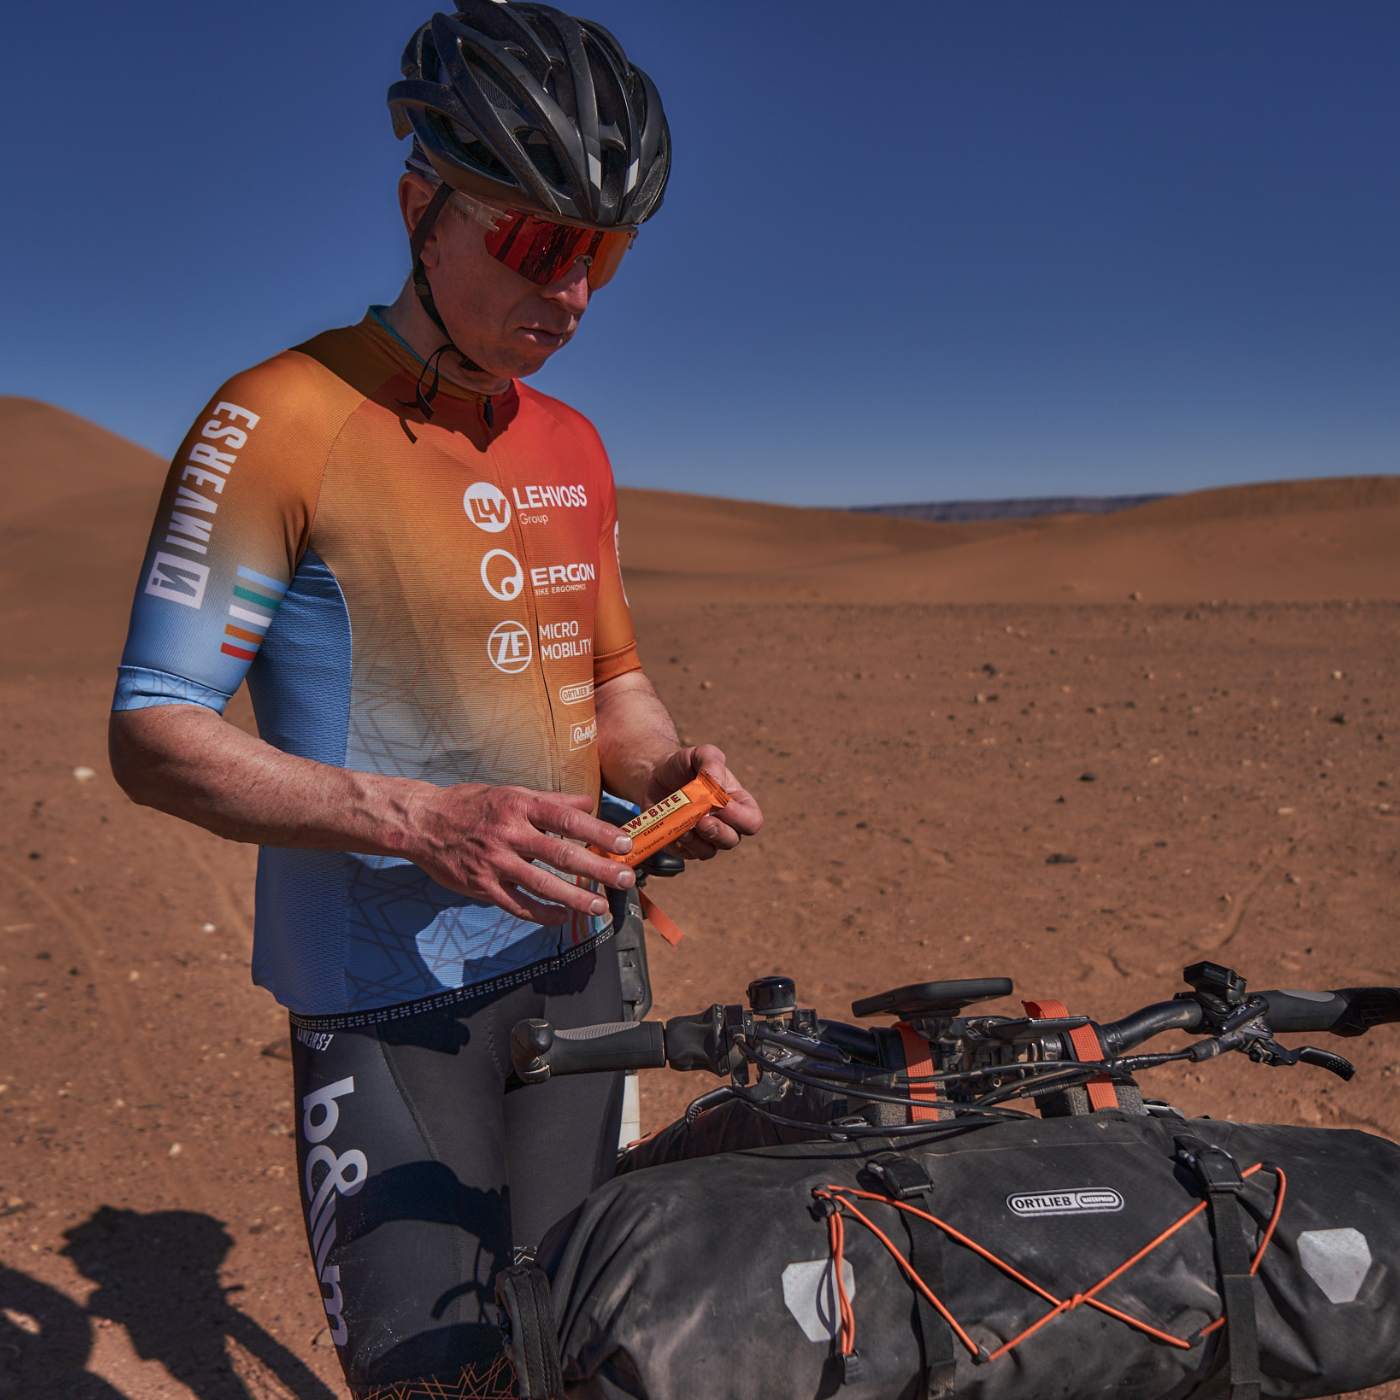 Crossing the border: An impressive biking ride through Morocco